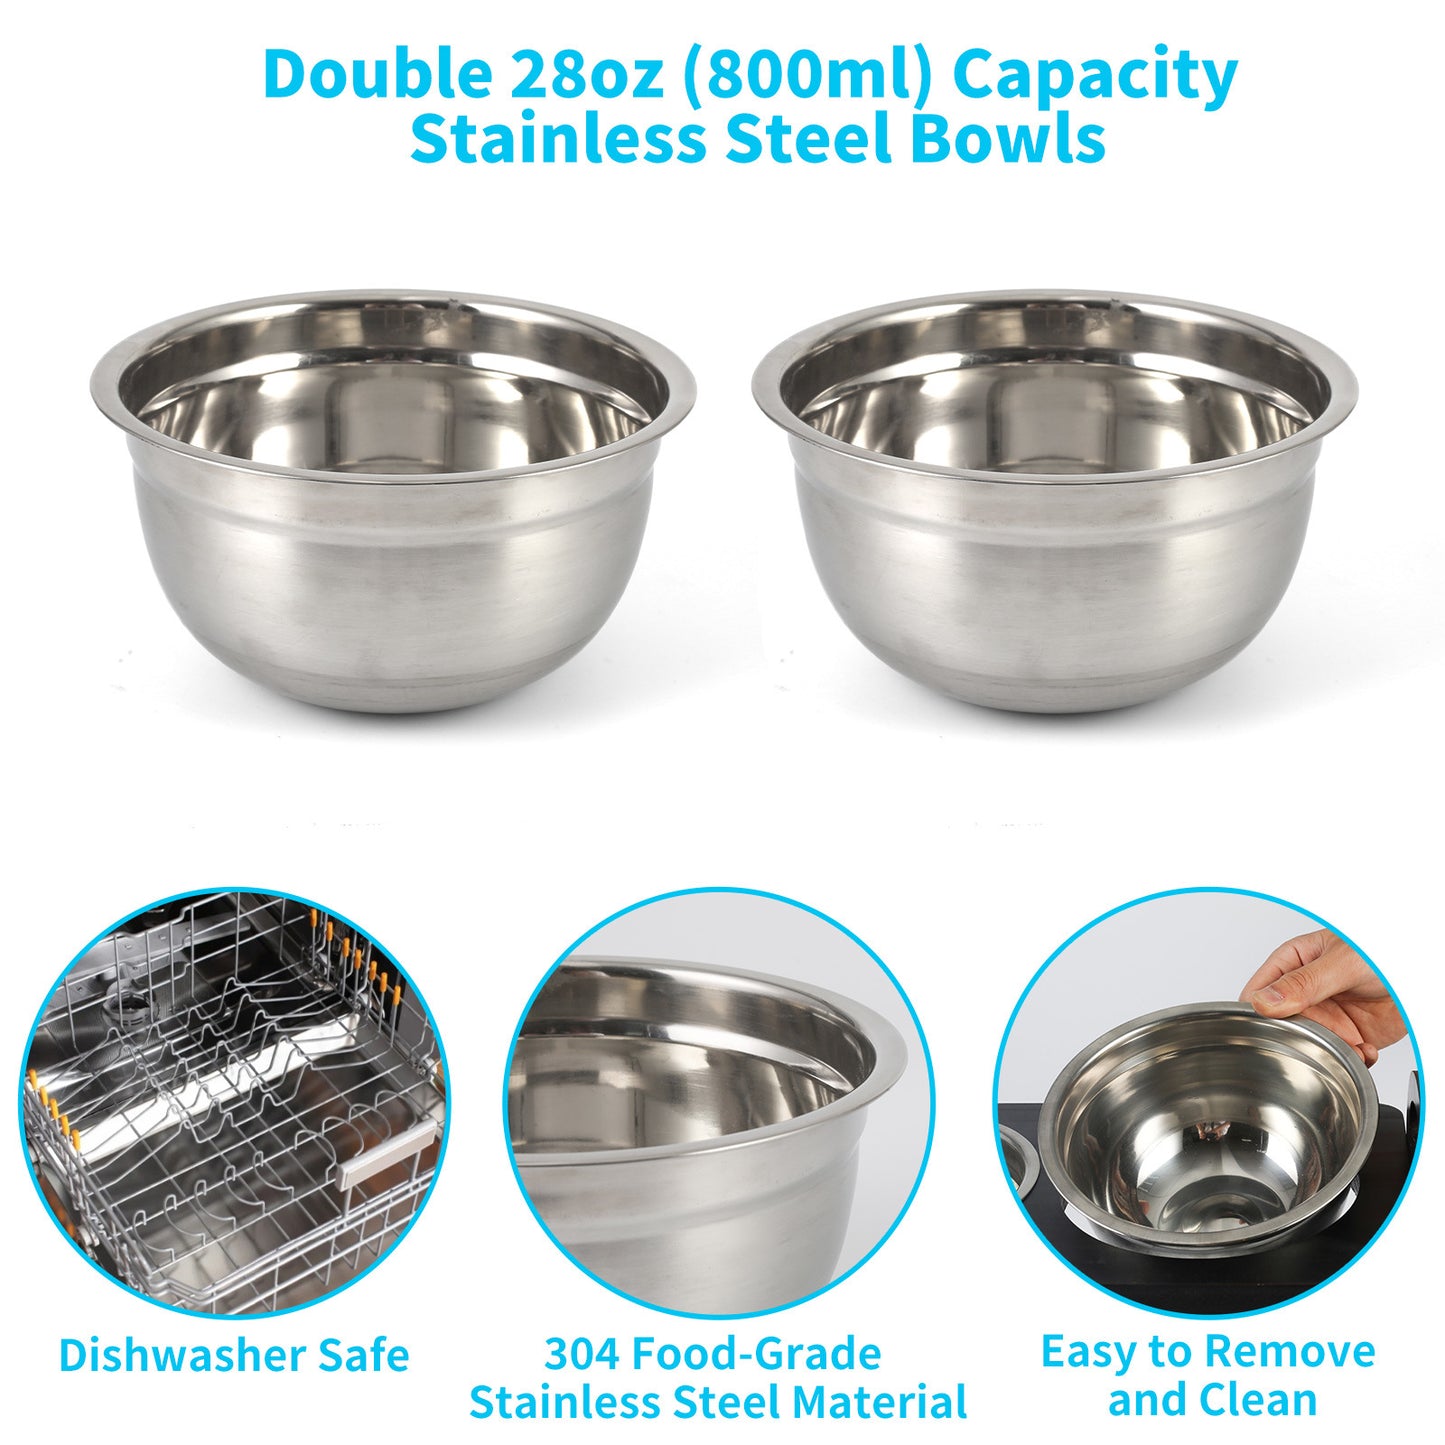 Elevated Dog Bowls for Medium Large Sized Dogs